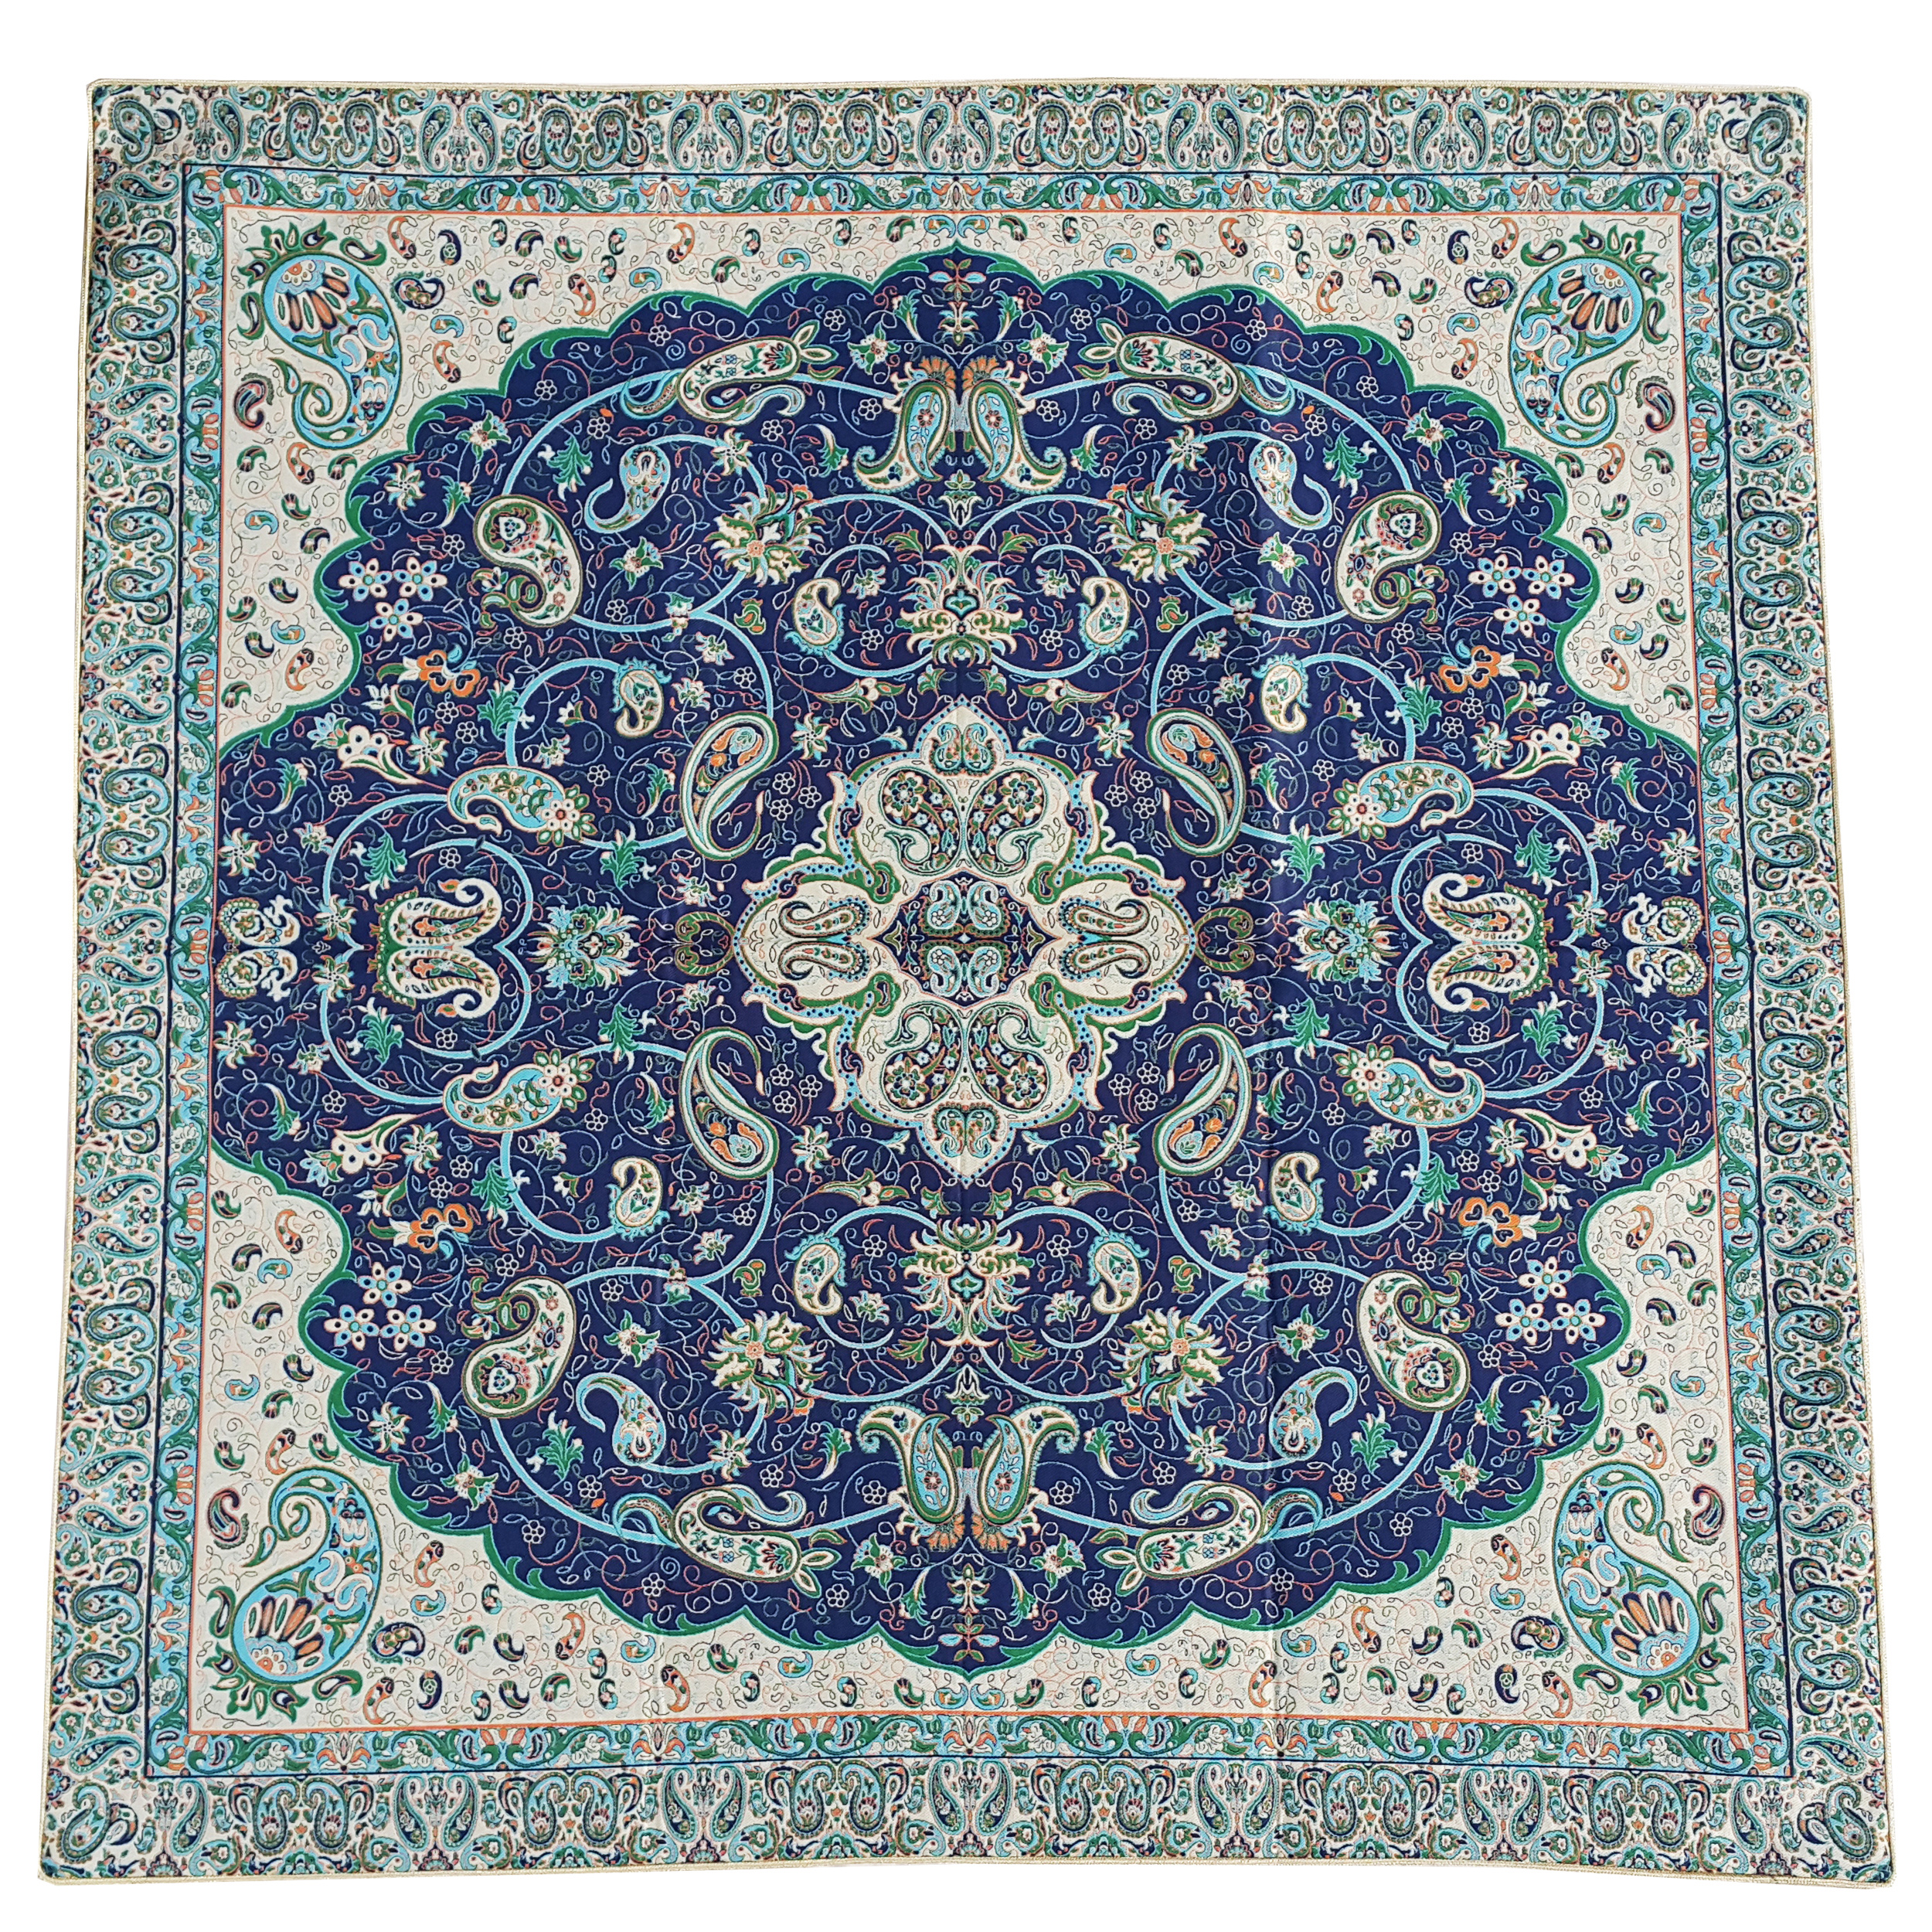 Silk cashmere tablecloth, Shah Abbasi Model, code 01